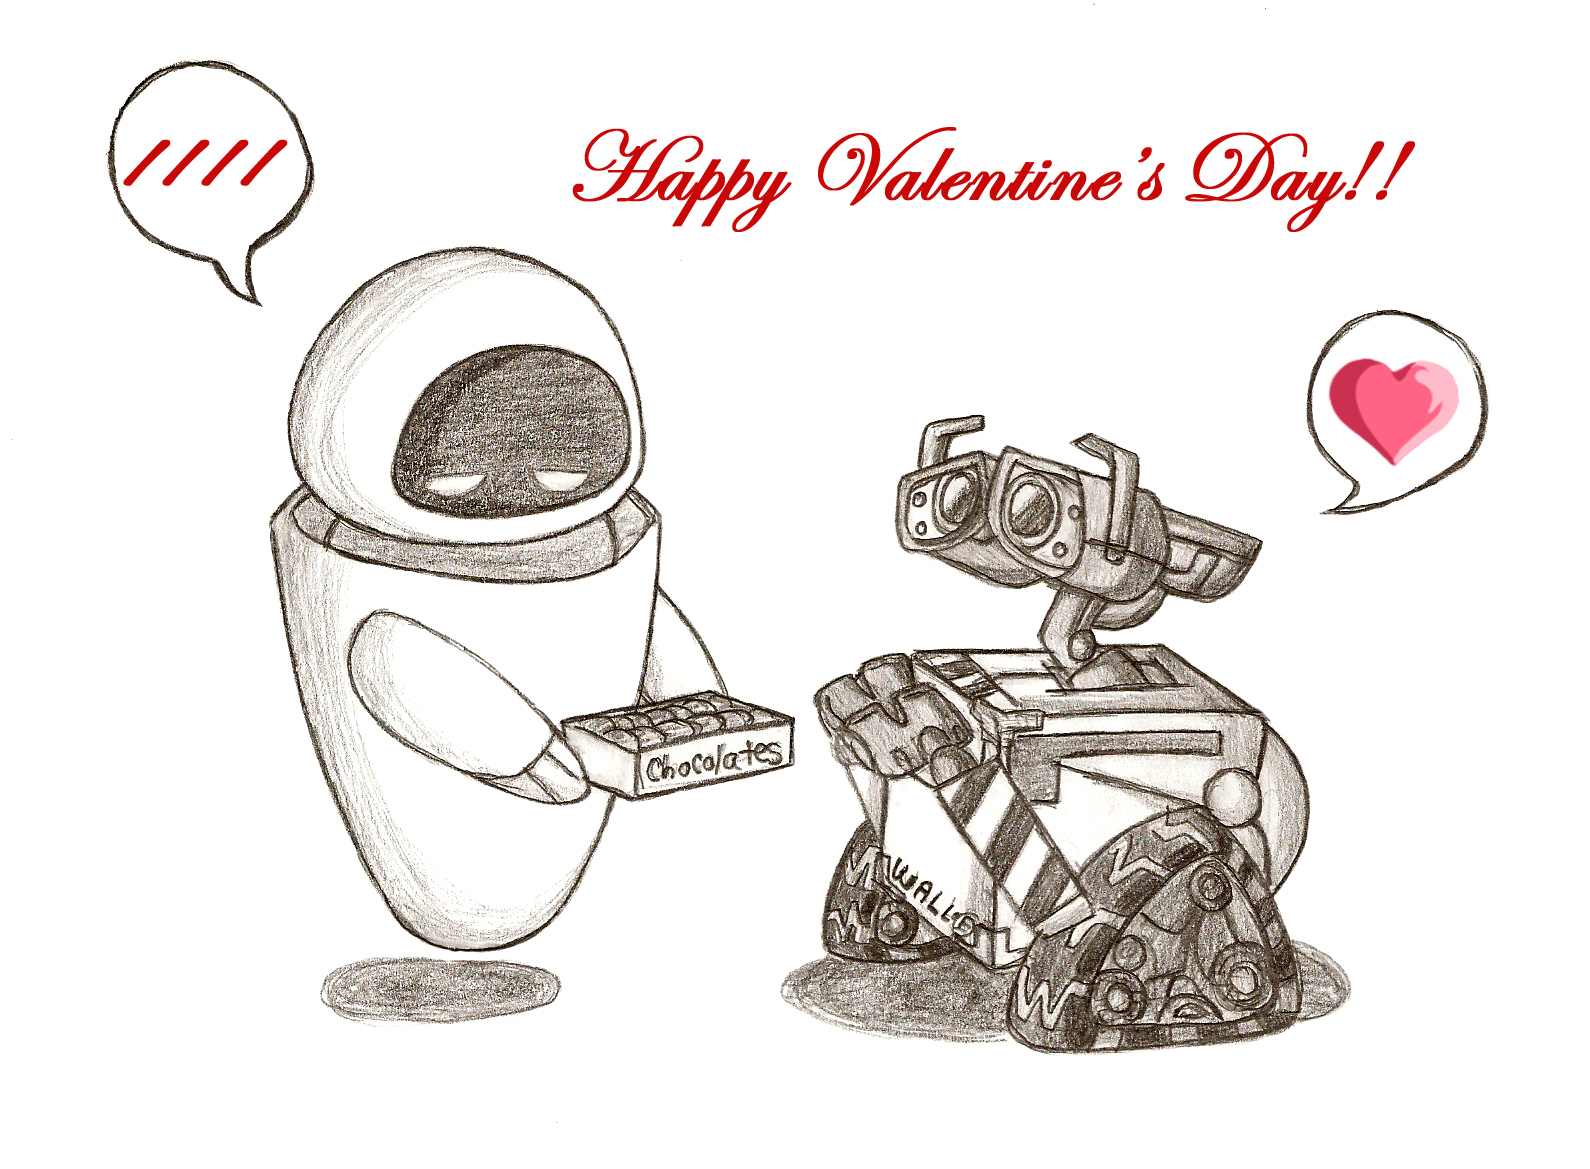 http://2.bp.blogspot.com/-rhbb1jjjcqE/T9icj2G5pBI/AAAAAAAAAto/B0E8wSSsNlY/s1600/WALL_E_and_EVE_Valentines_Day_by_AnimeChick4DDR.jpg